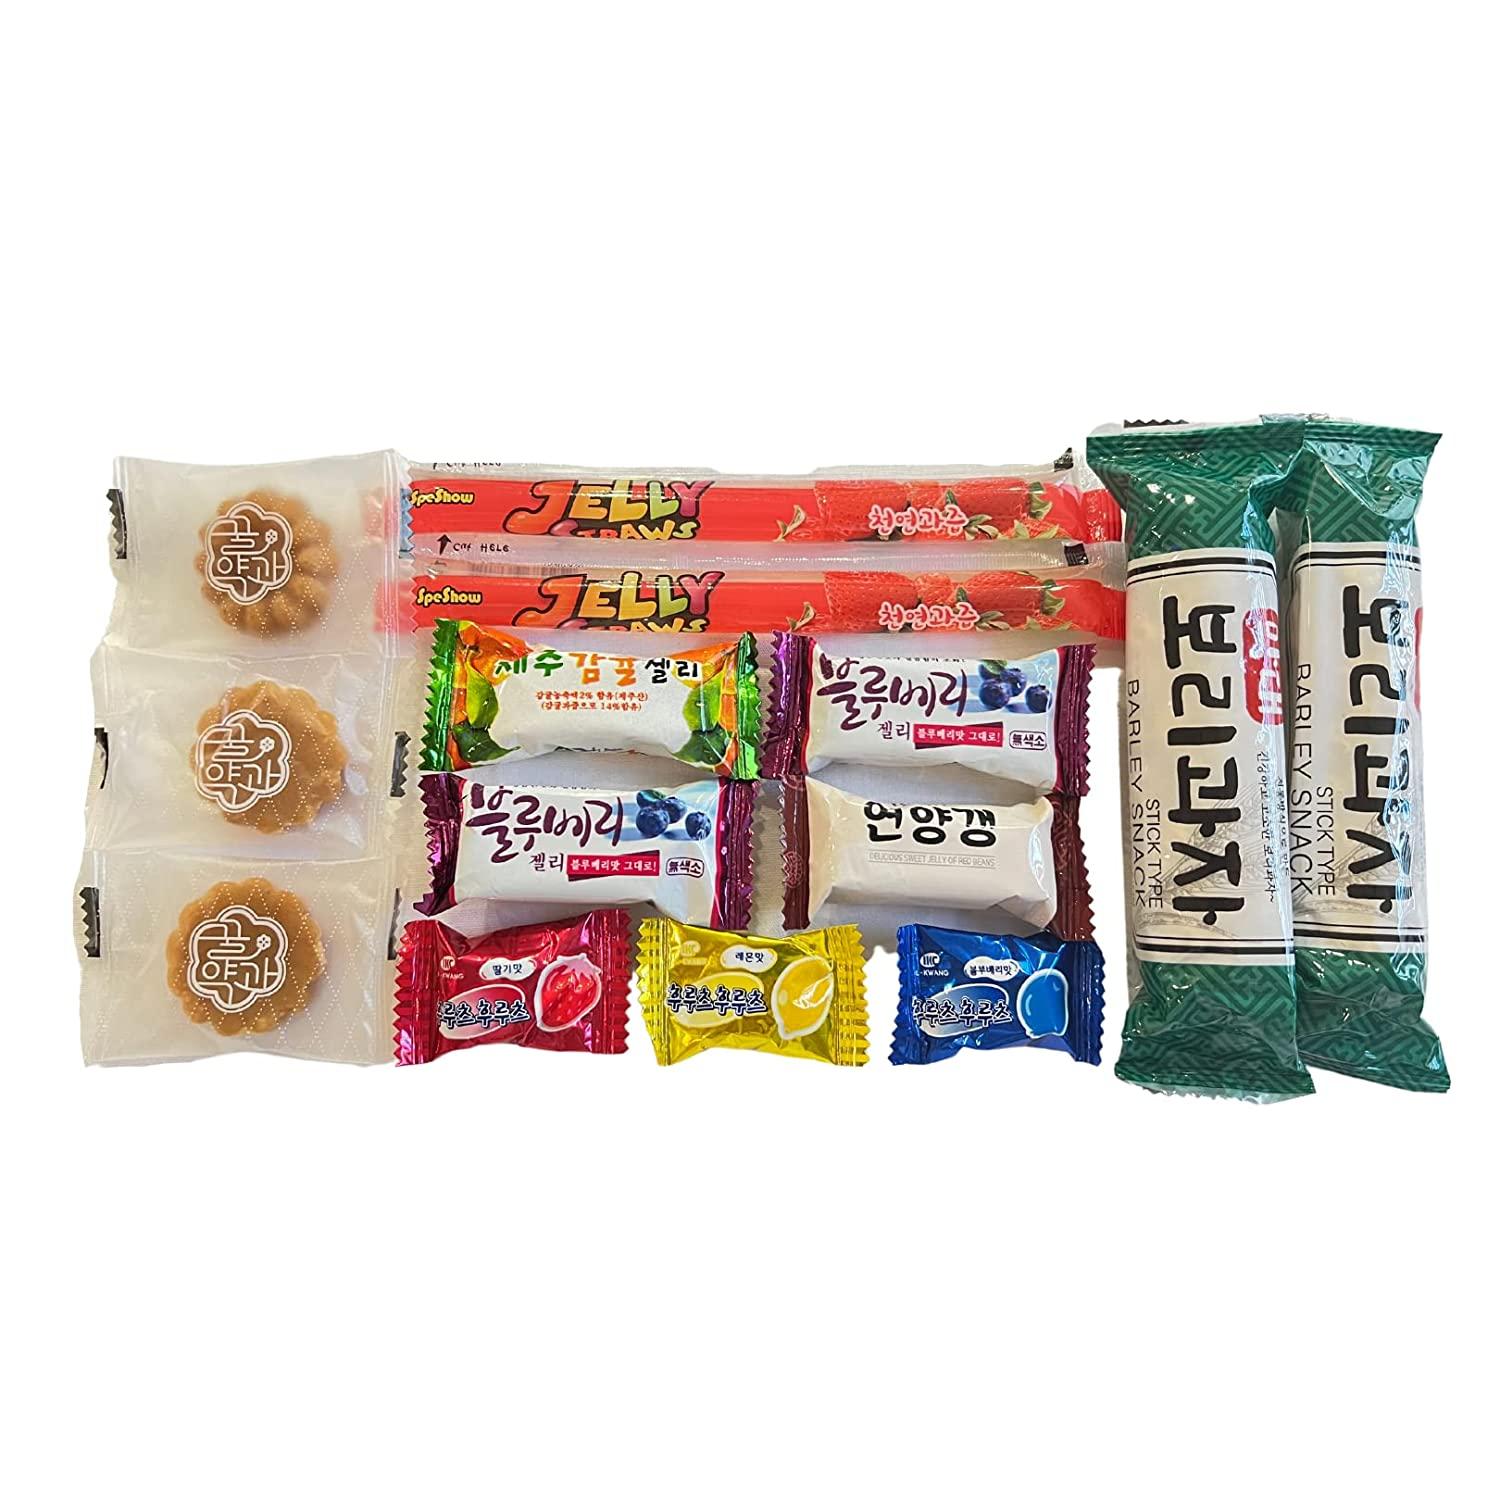  Korean Snack Box Variety Pack - 46 Count Snacks